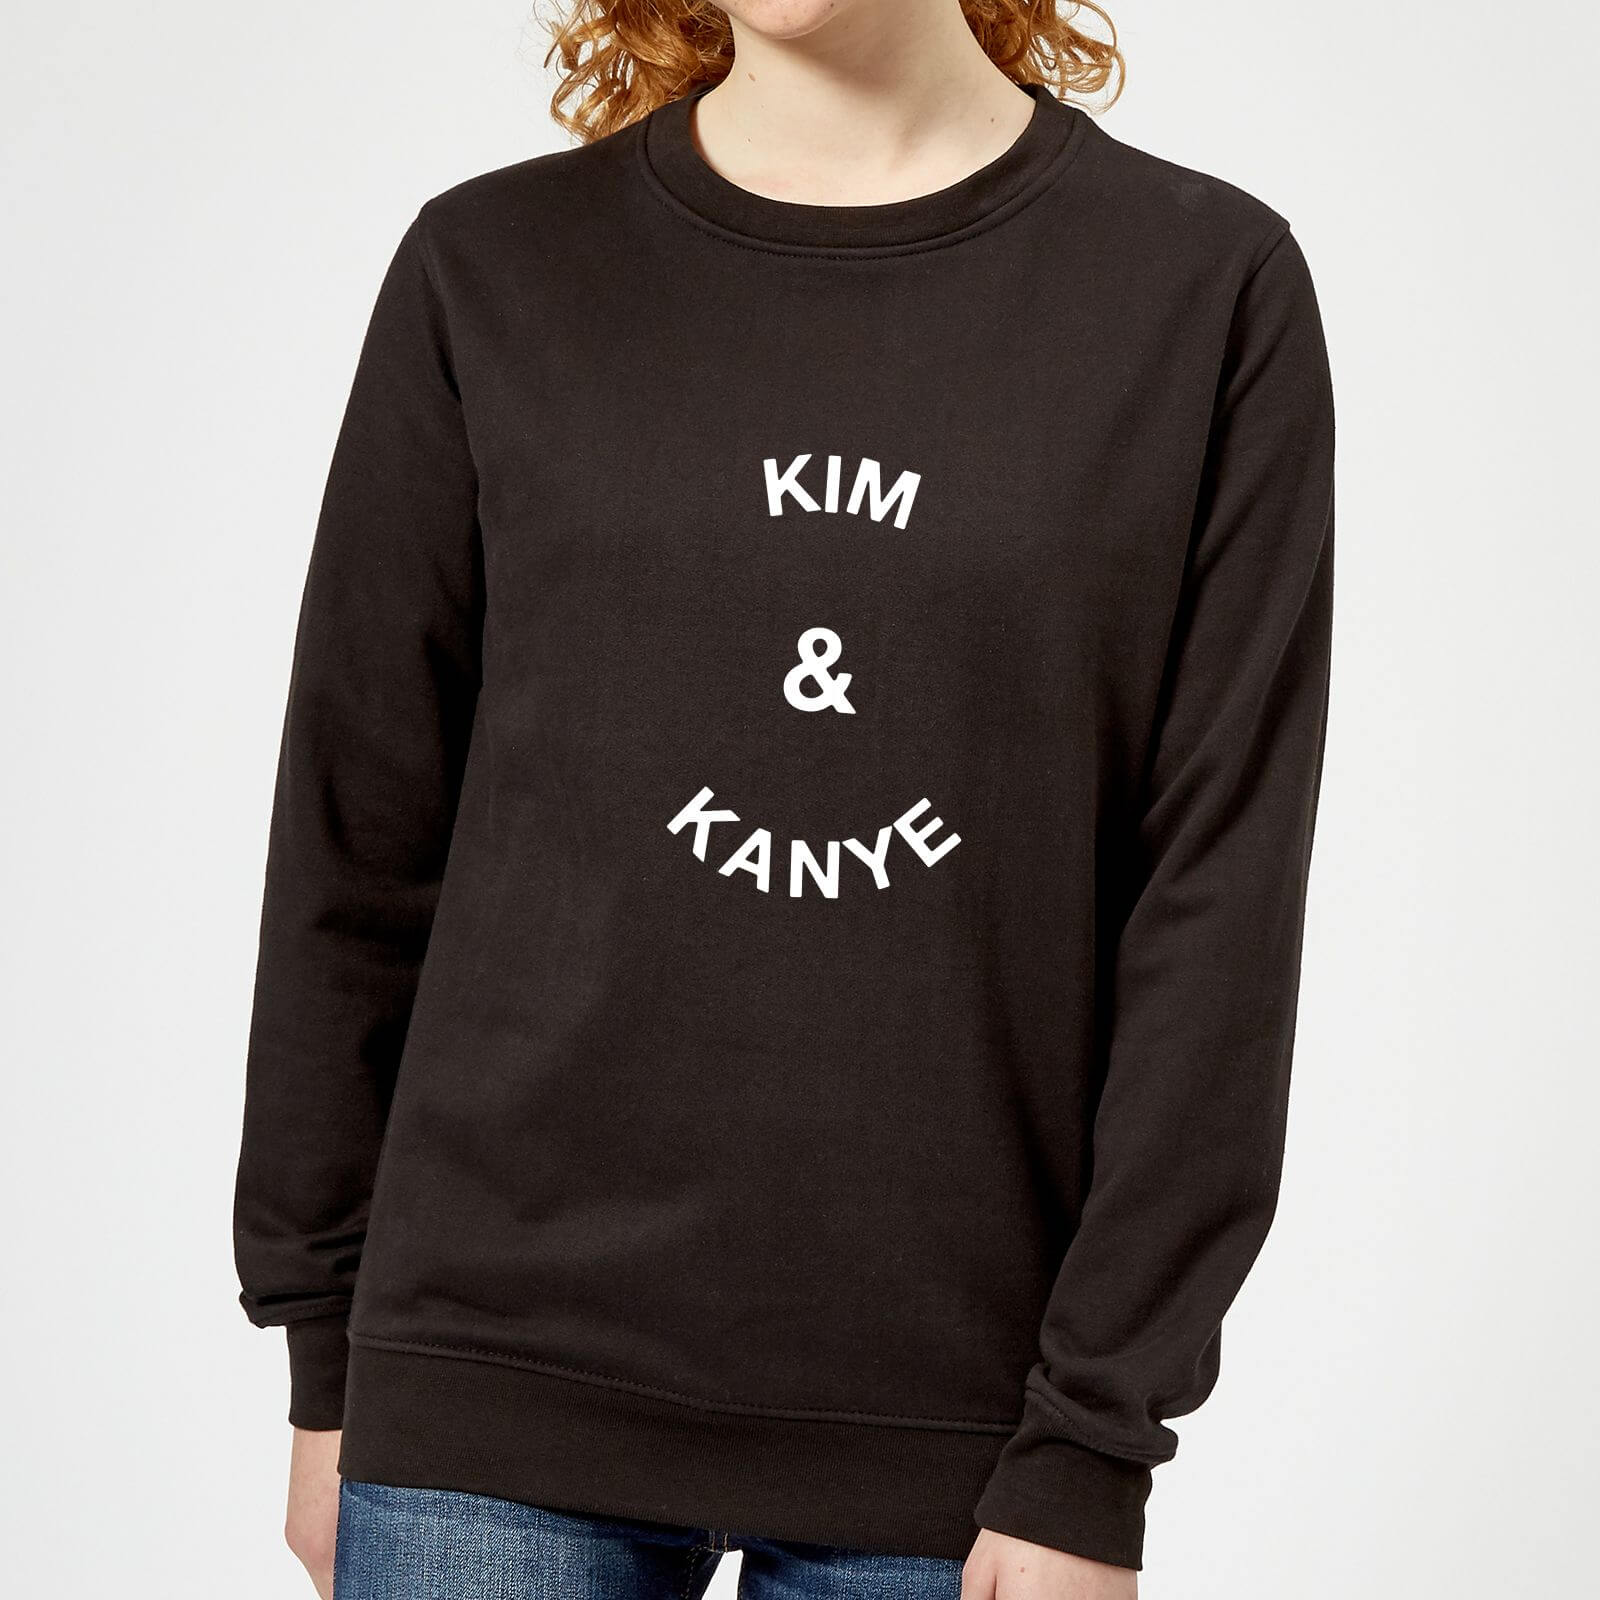 Kim & Kanye Women's Sweatshirt - Black - S - Black